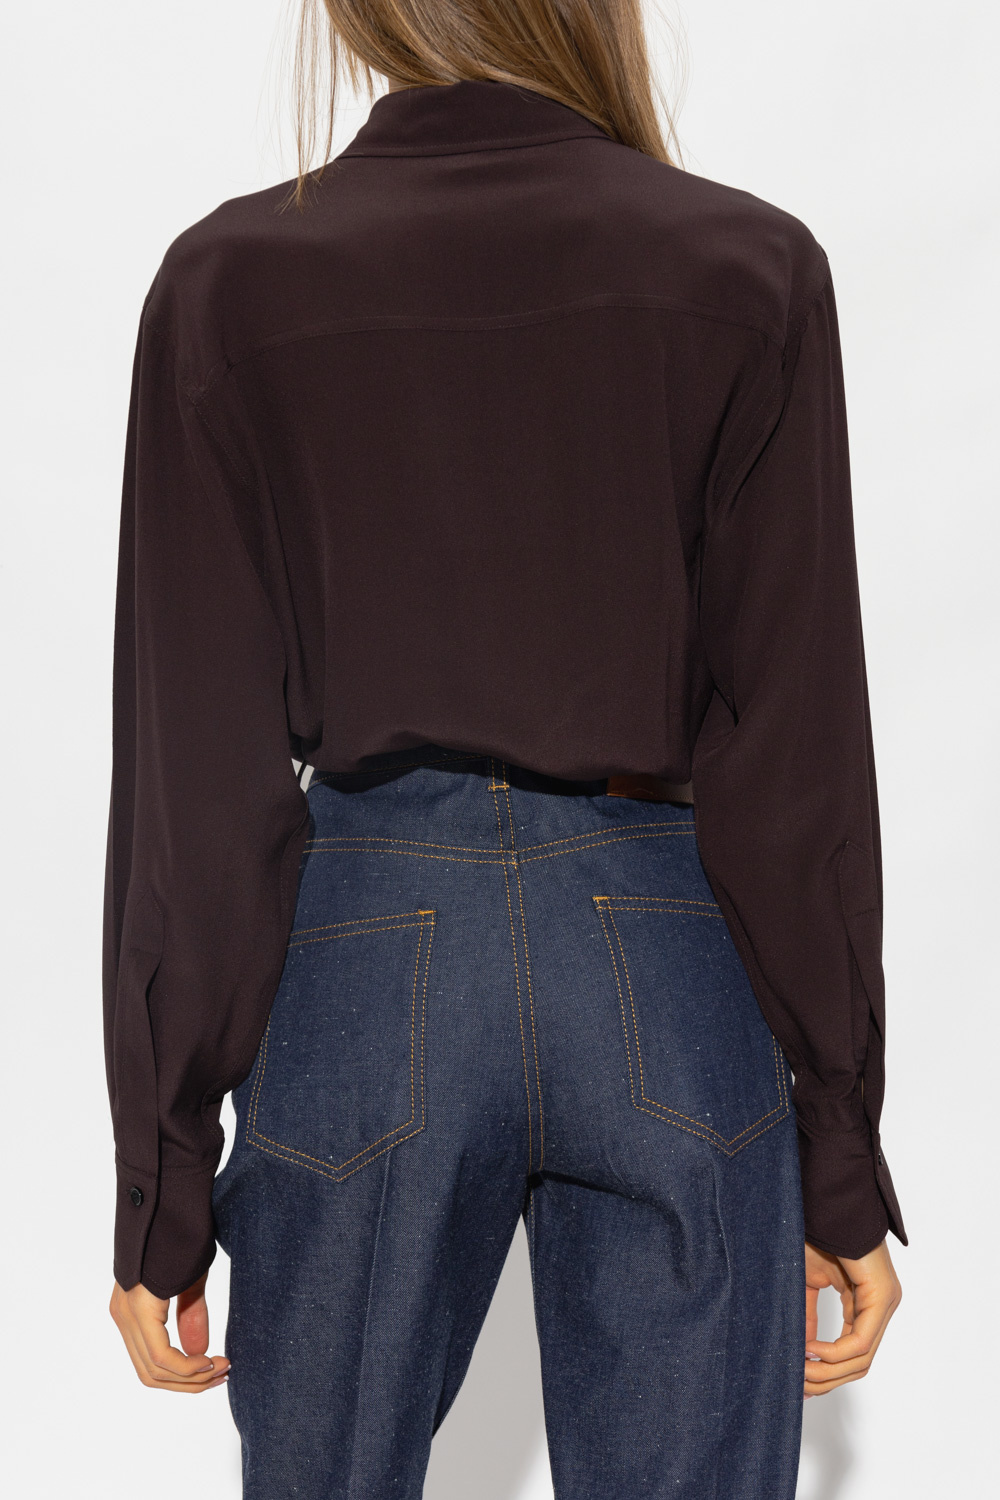 Victoria Beckham Silk shirt sommer with pockets